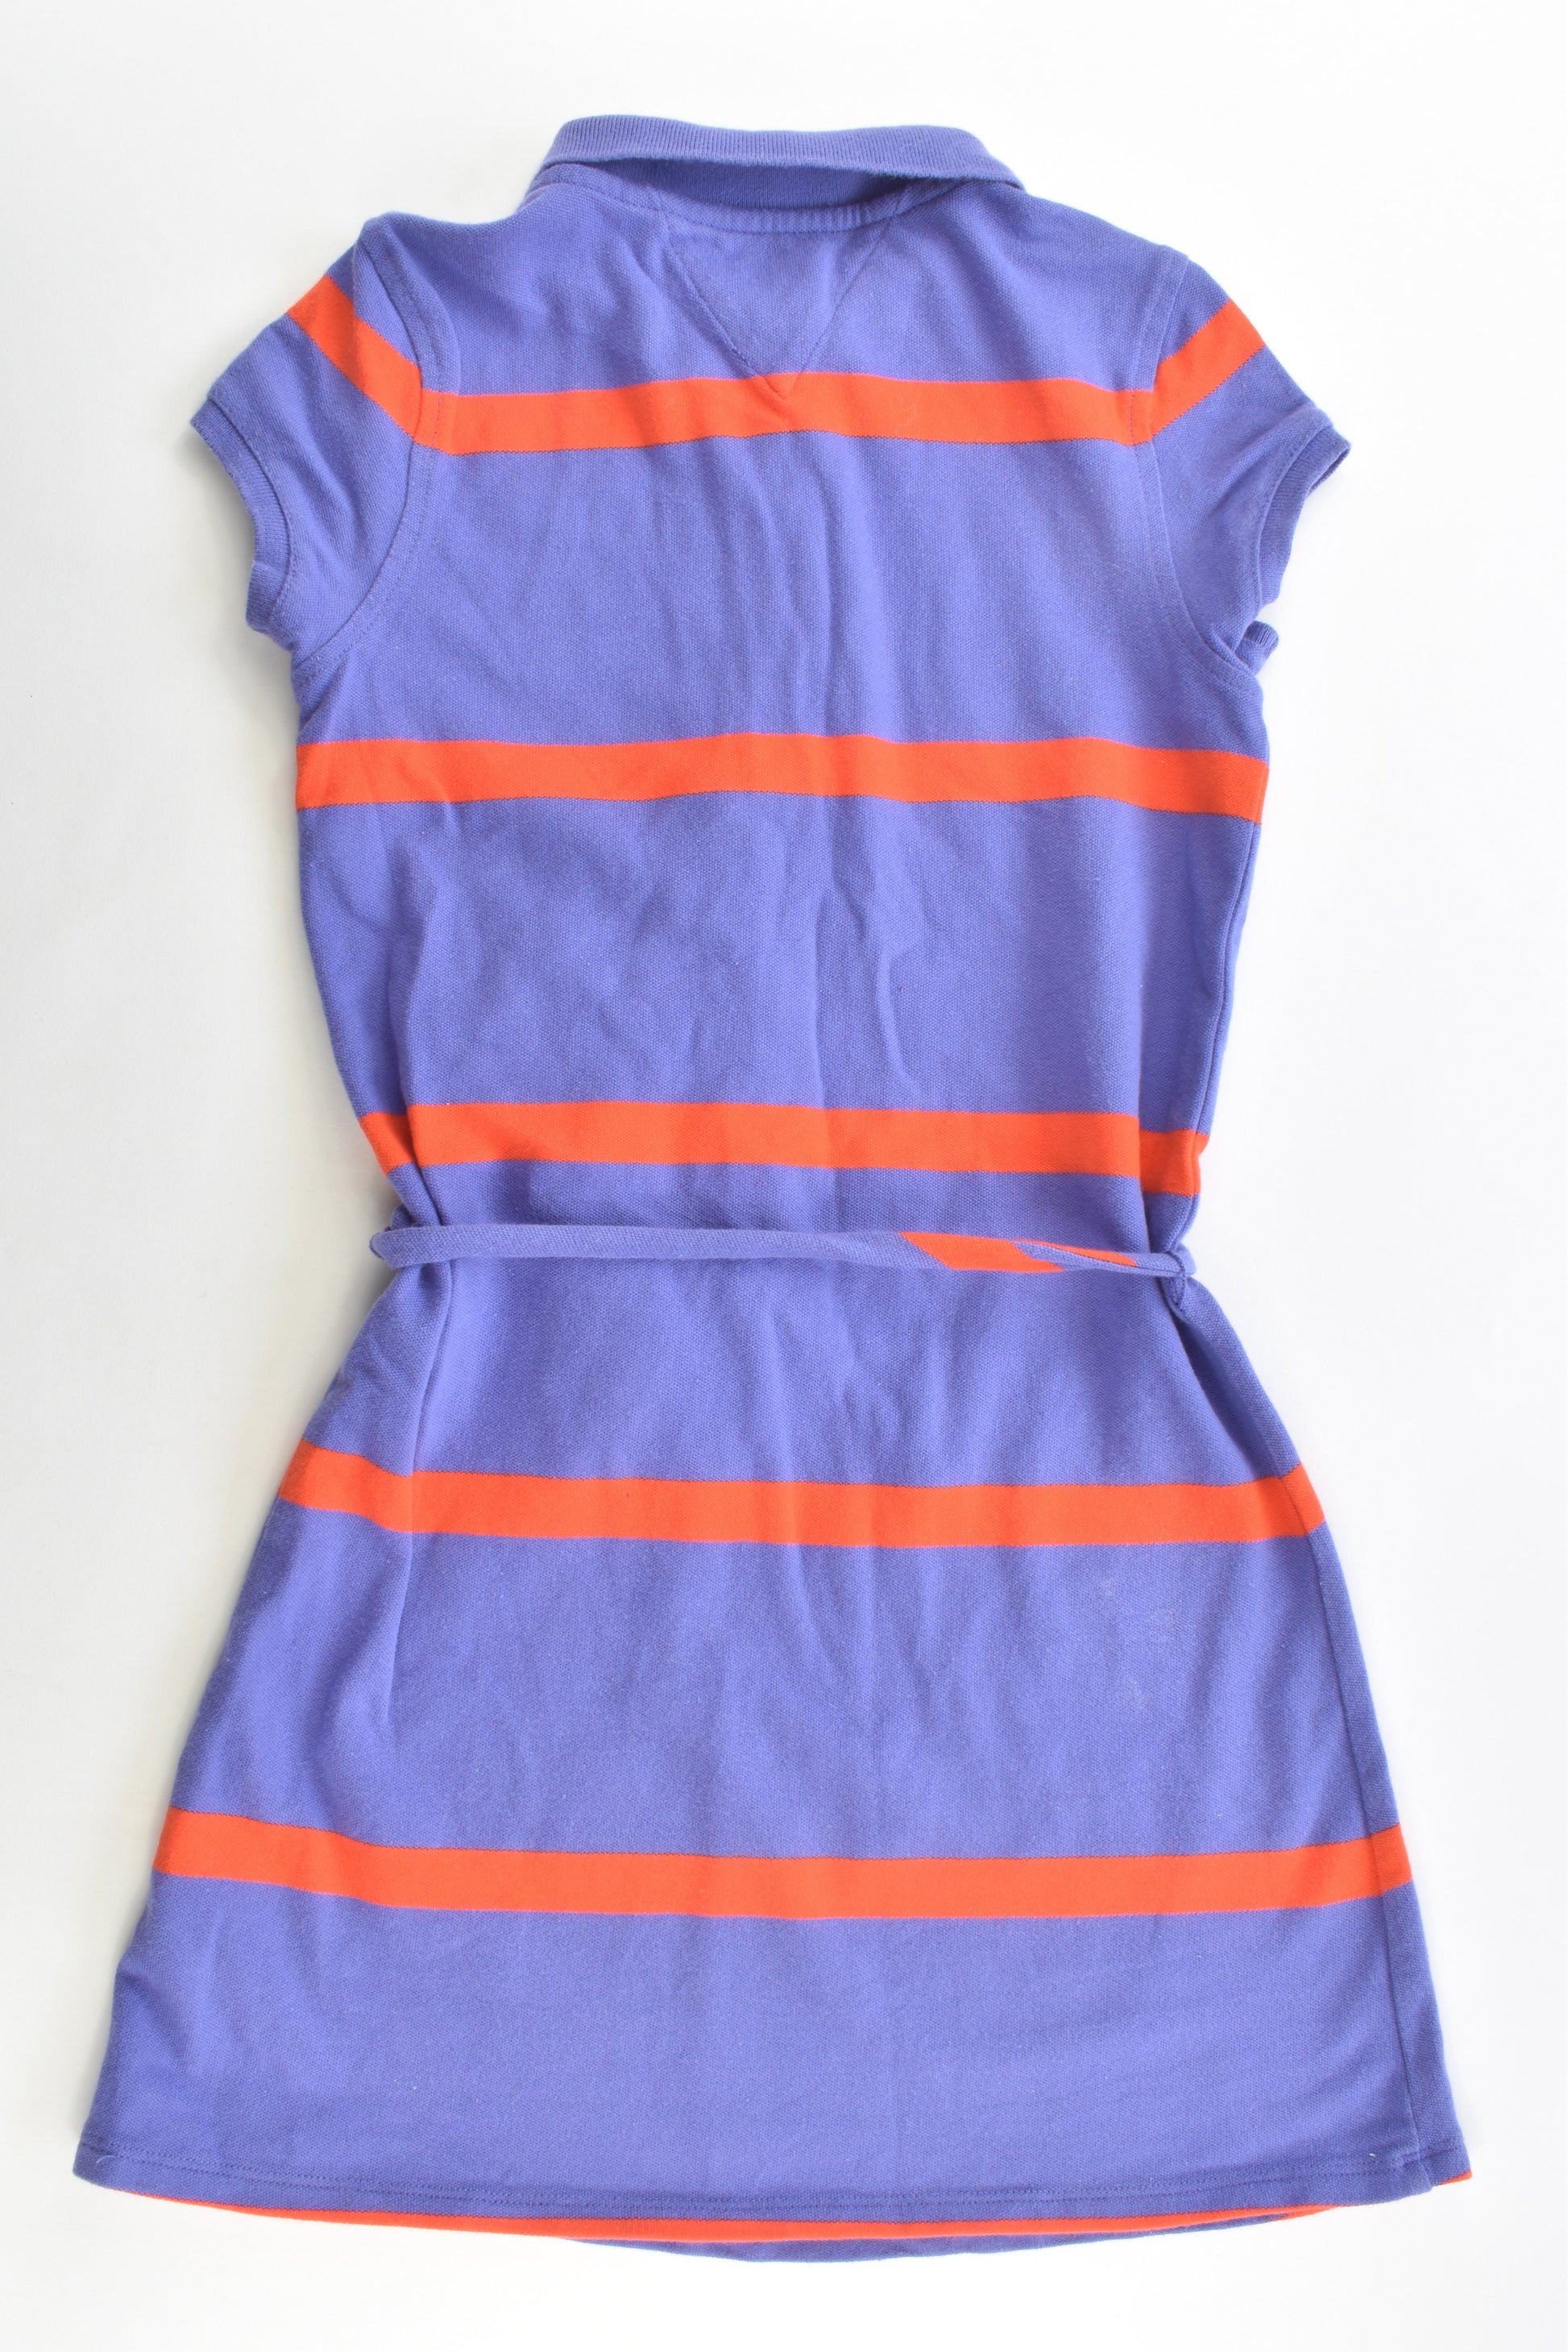 Tommy Hilfiger Size 6-7 Striped Dress with Belt